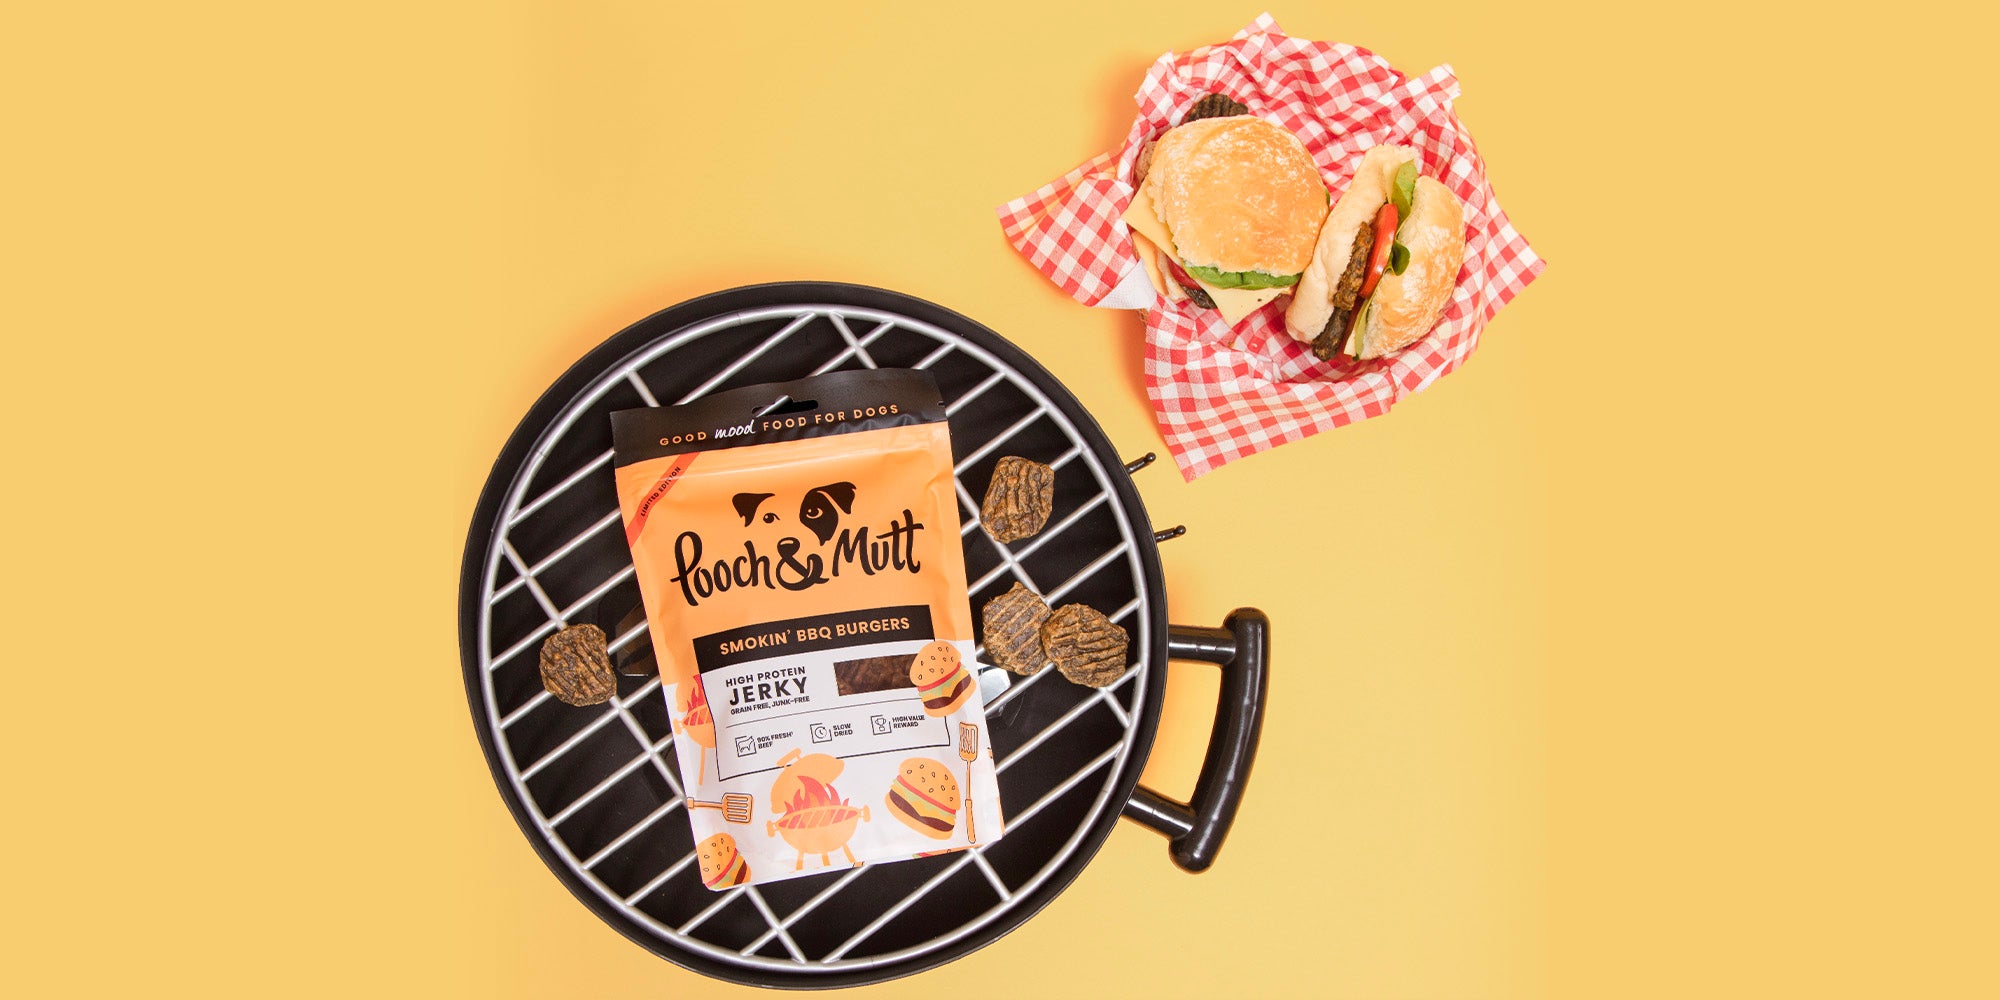 An unlit BBQ with Pooch & Mutt Somkin' BBQ Treats in bag on it, against orange background